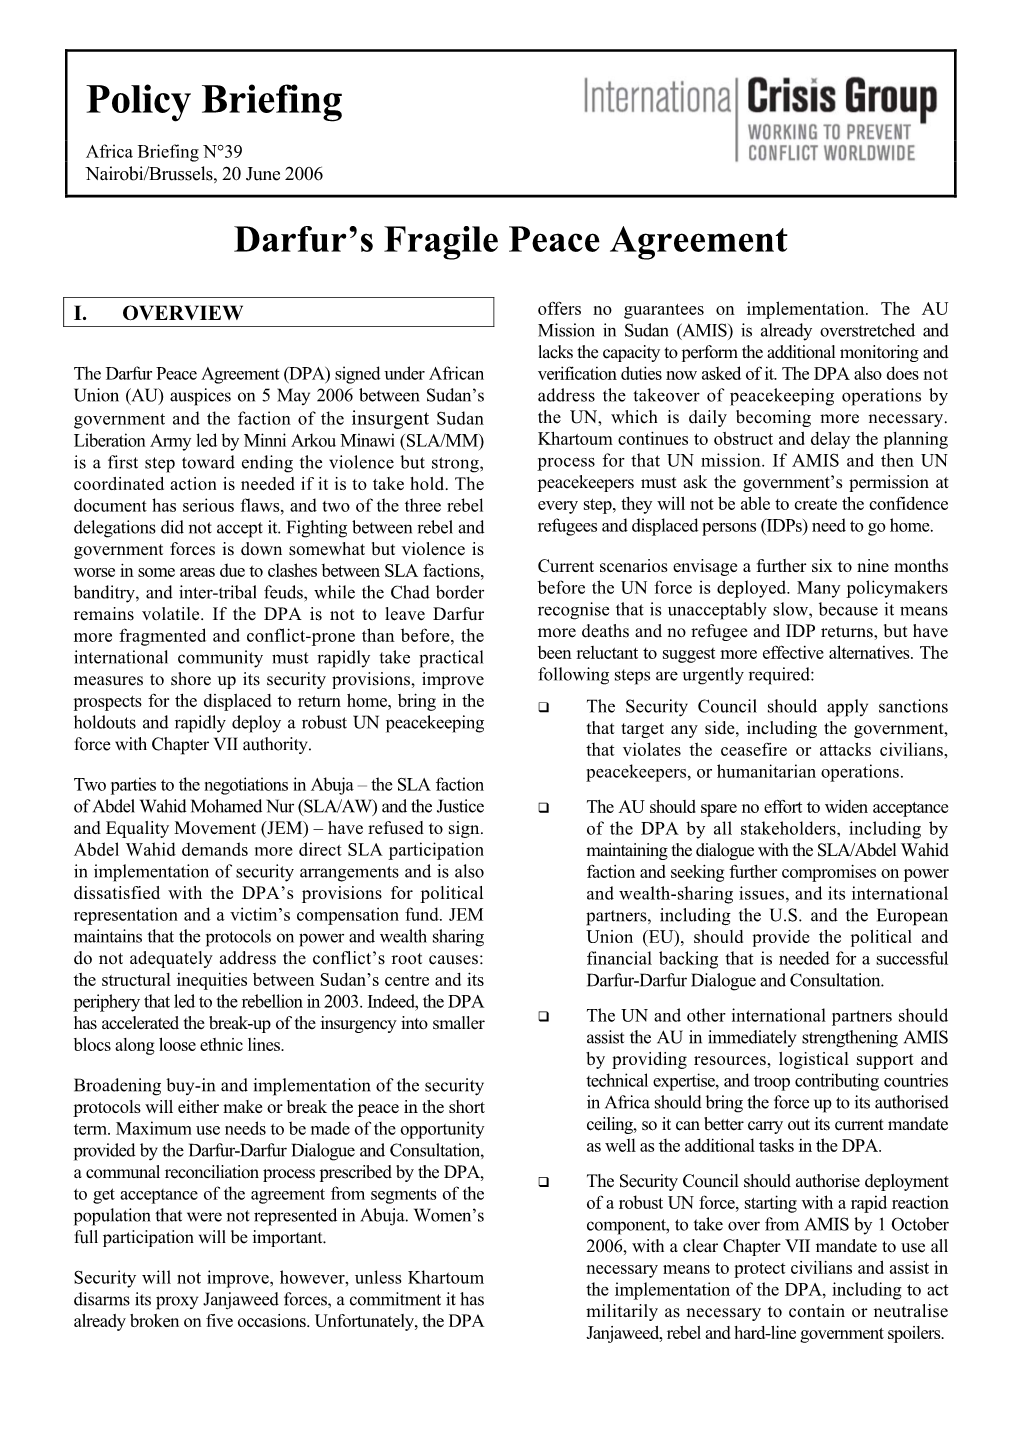 Africa Briefing, Nr. 39: Darfur's Fragile Peace Agreement